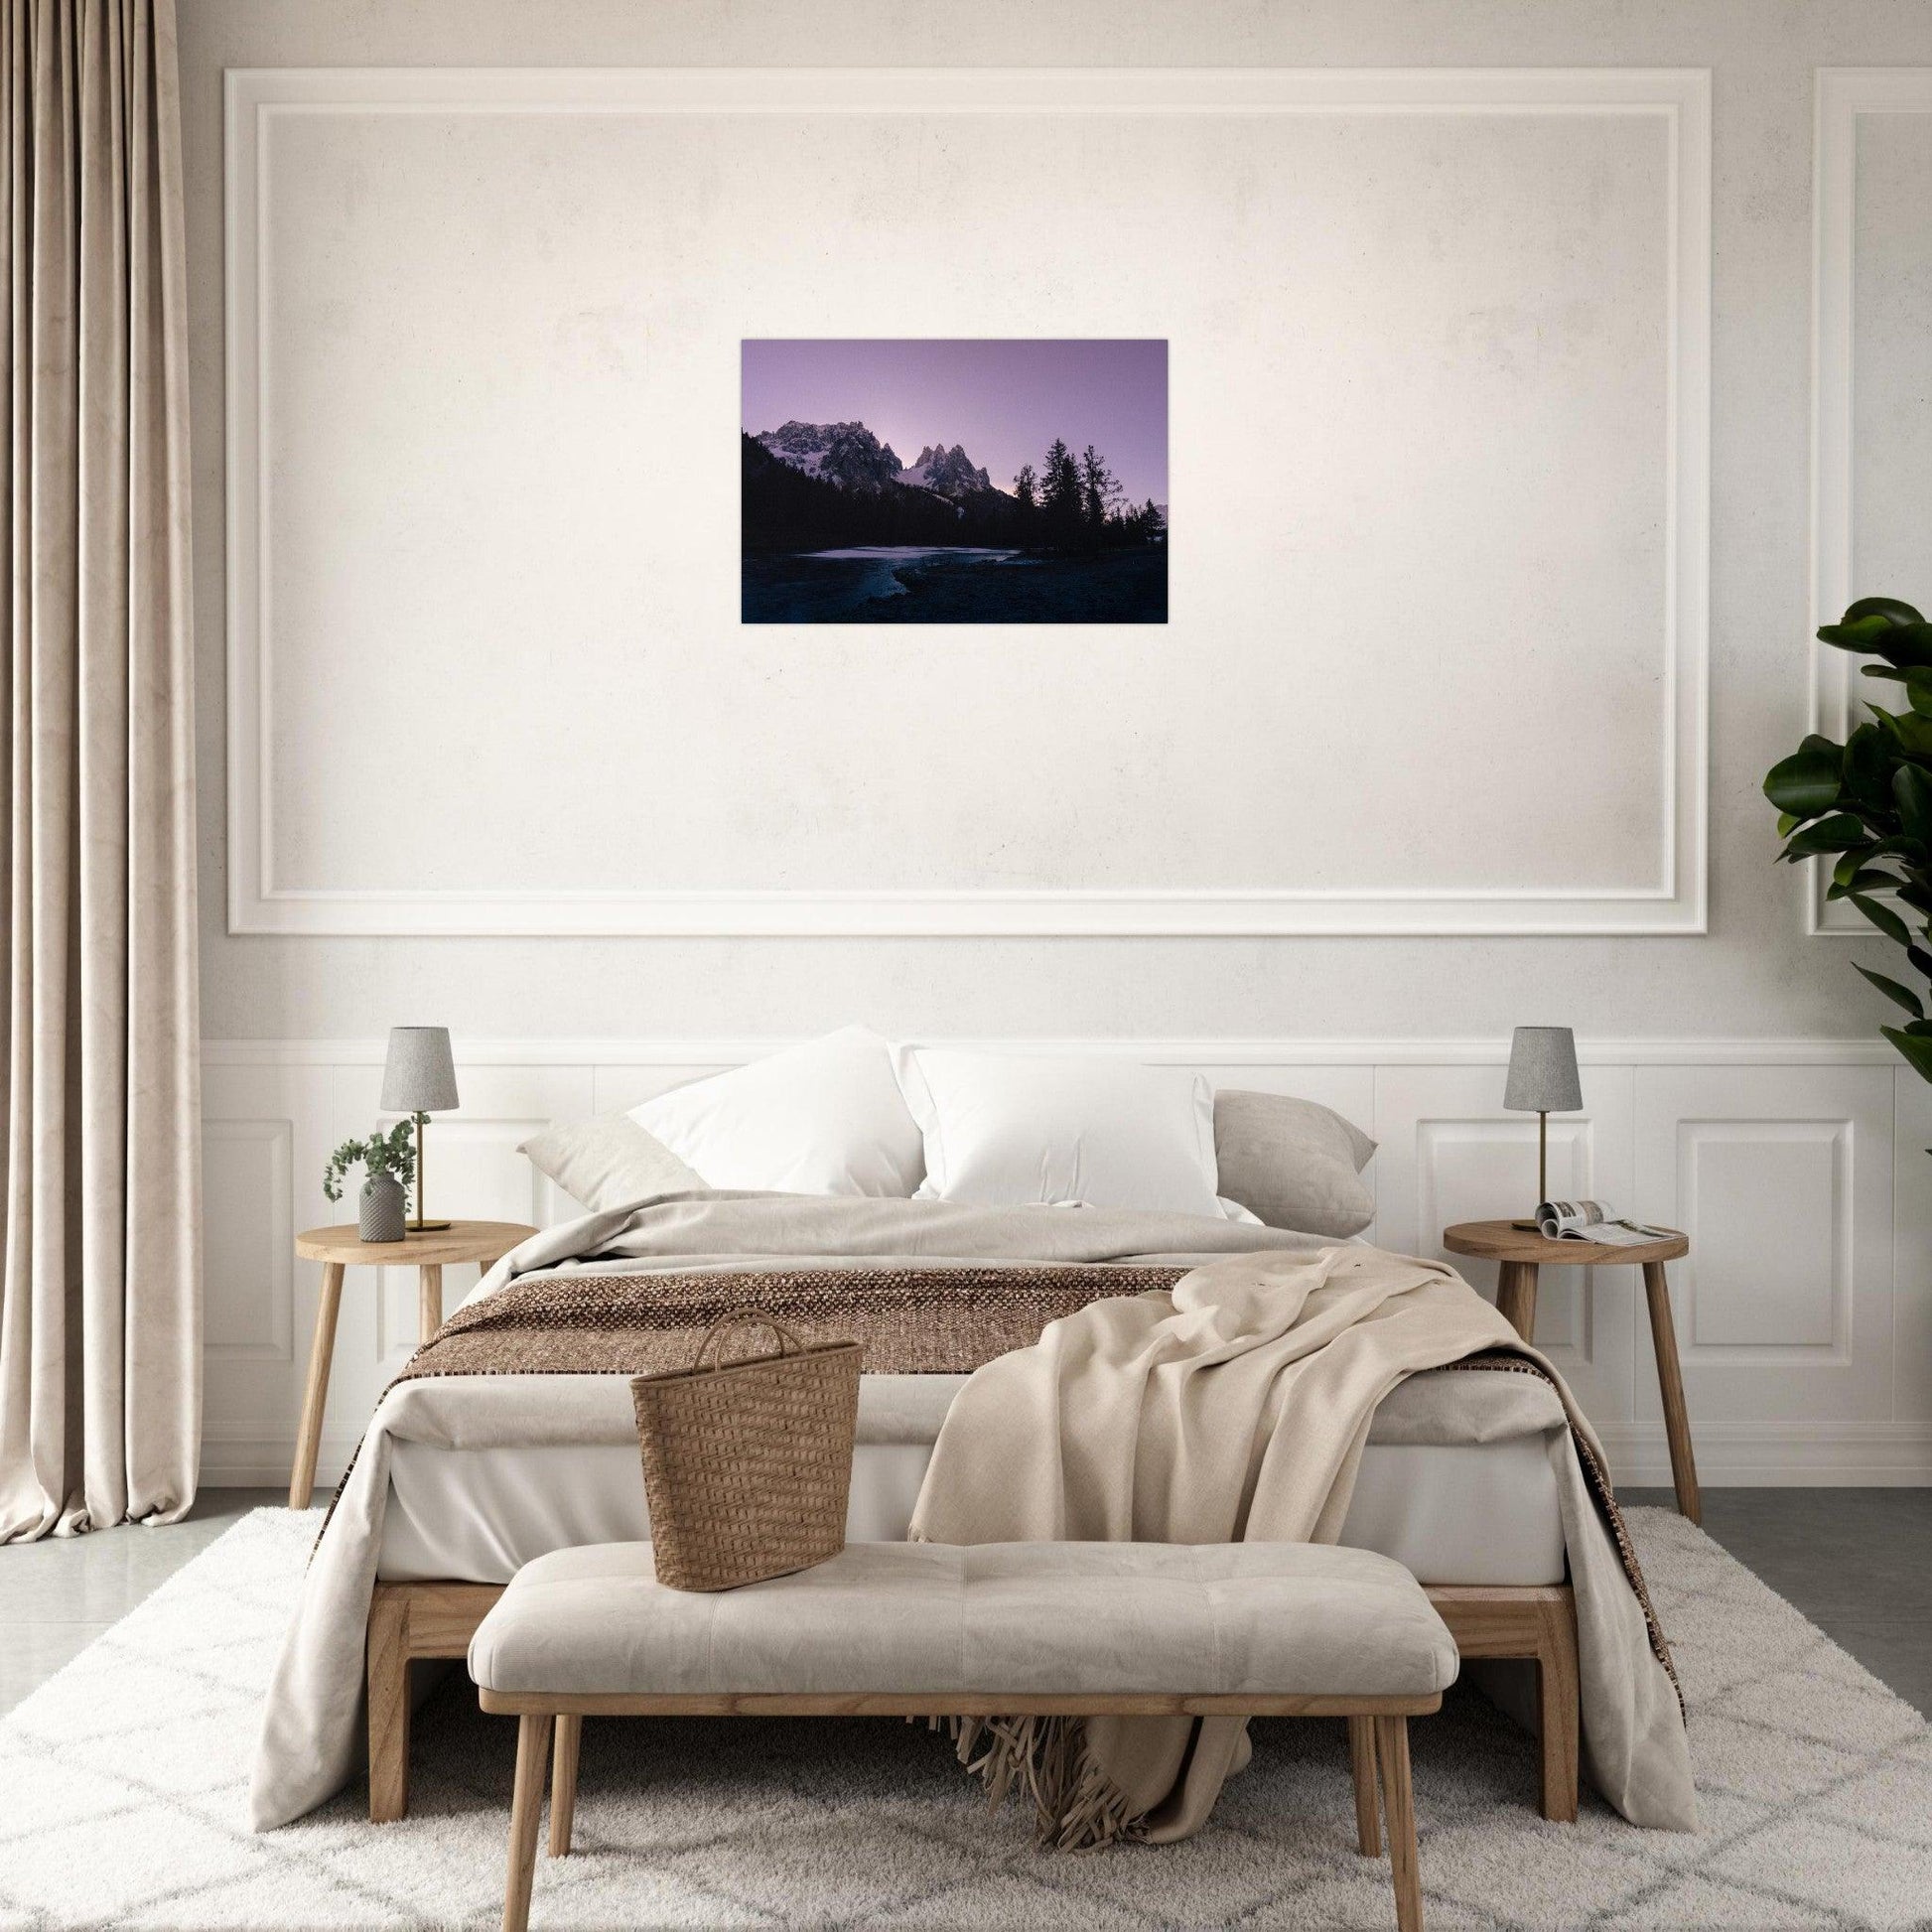 Indigo Sky | Premium metal wall art for bedroom | Linked Frame